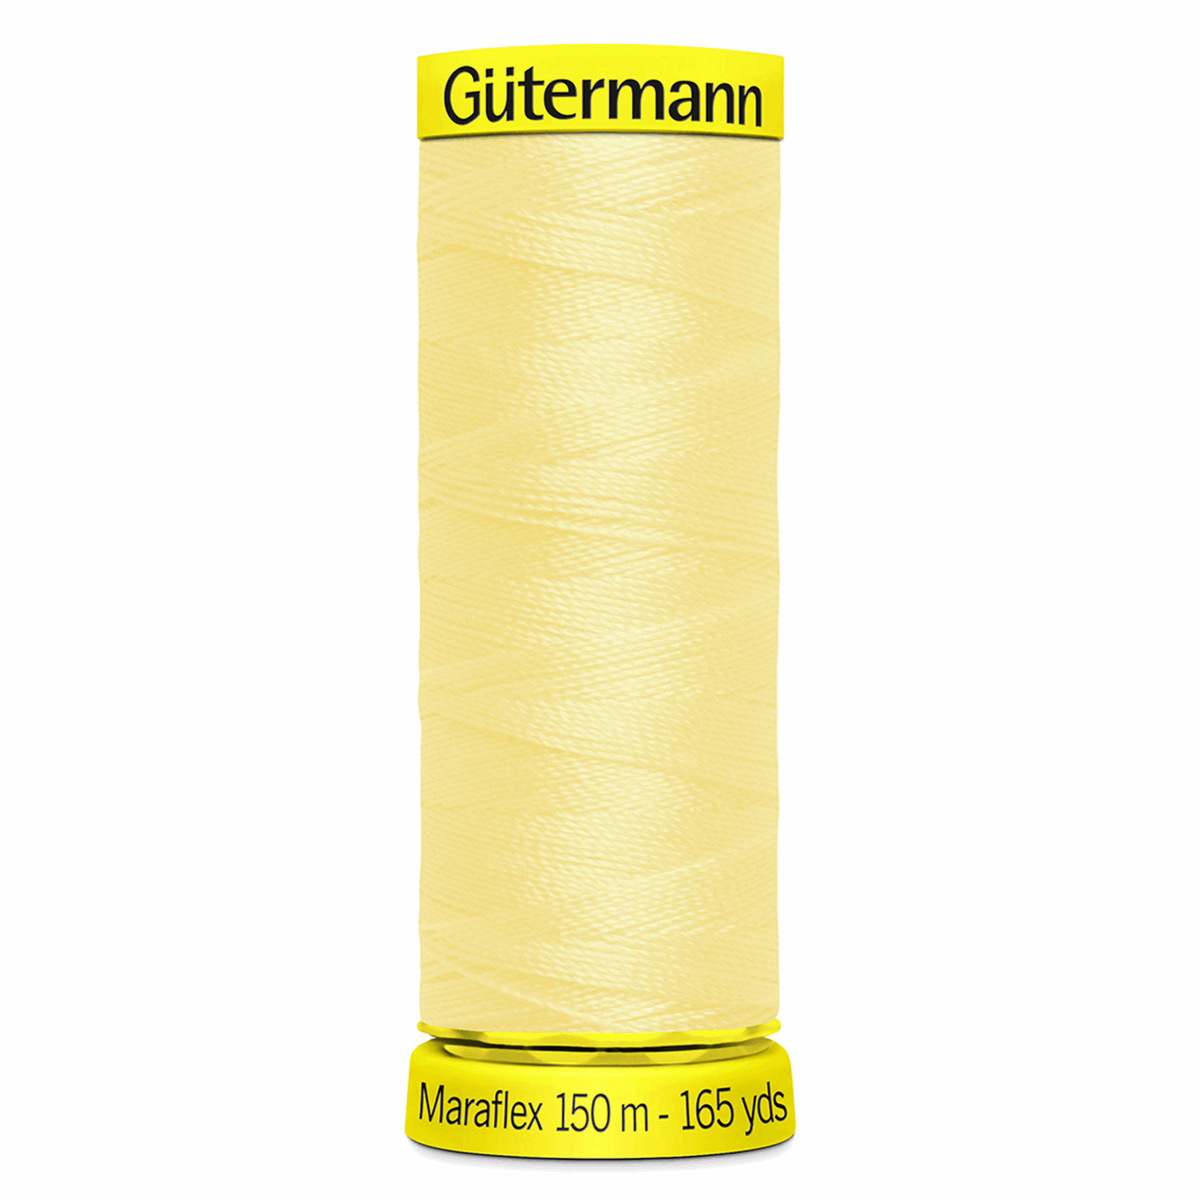 Gutermann Maraflex Elastic Sewing Thread 150m Primrose Yellow 325